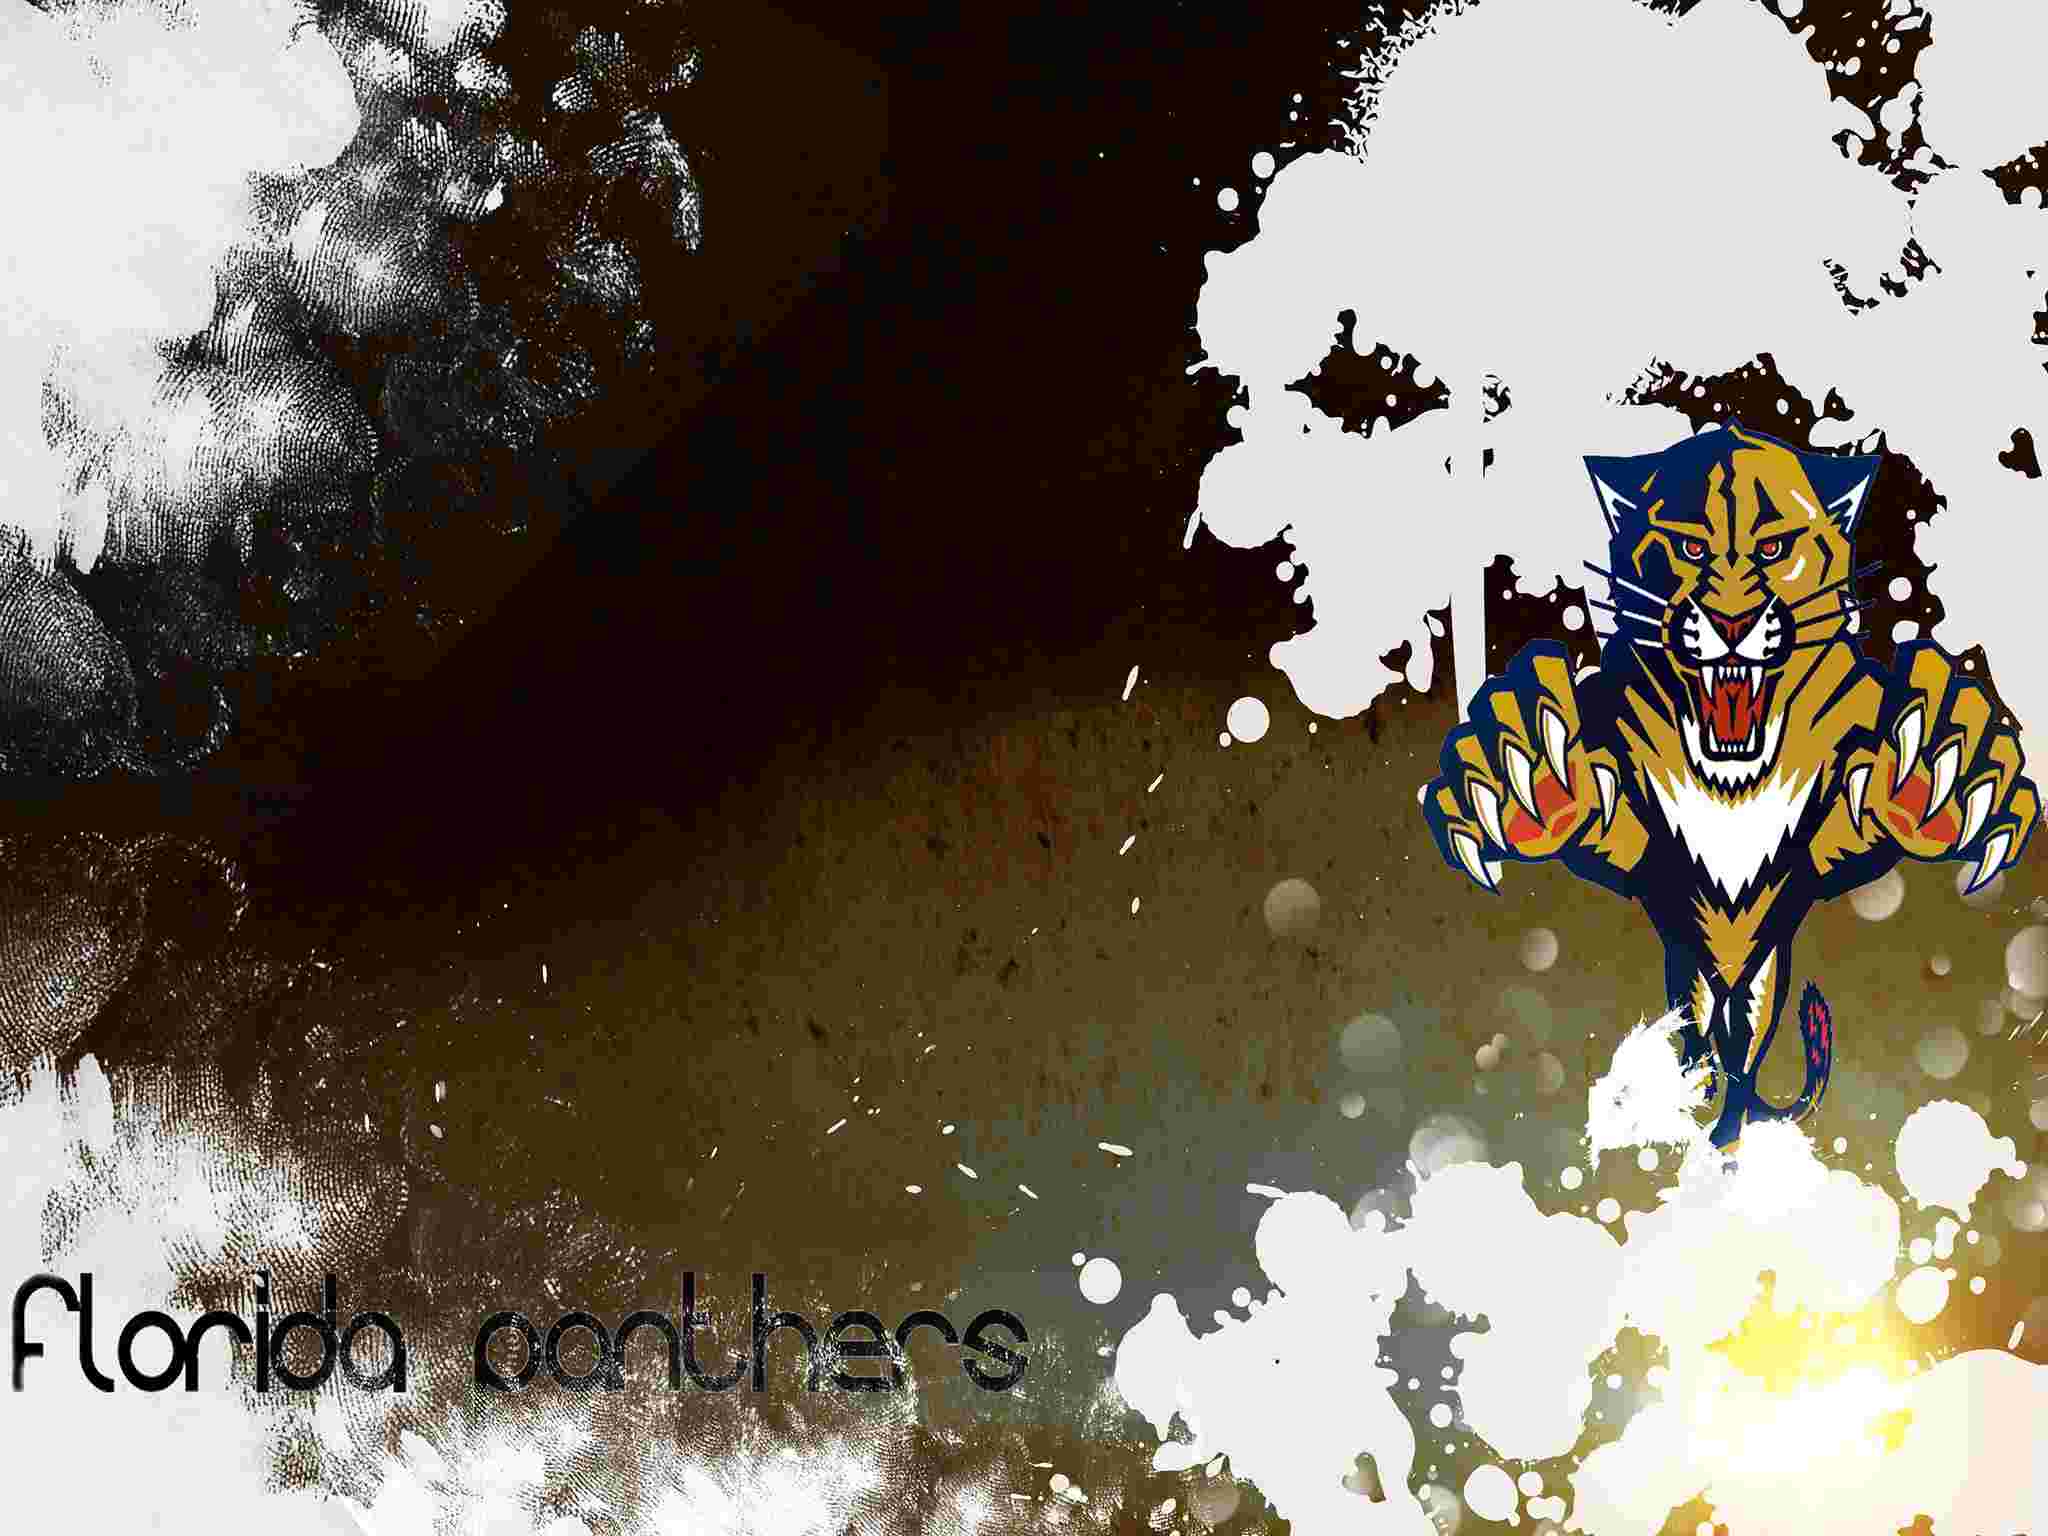 Florida Panthers Wallpaper HD